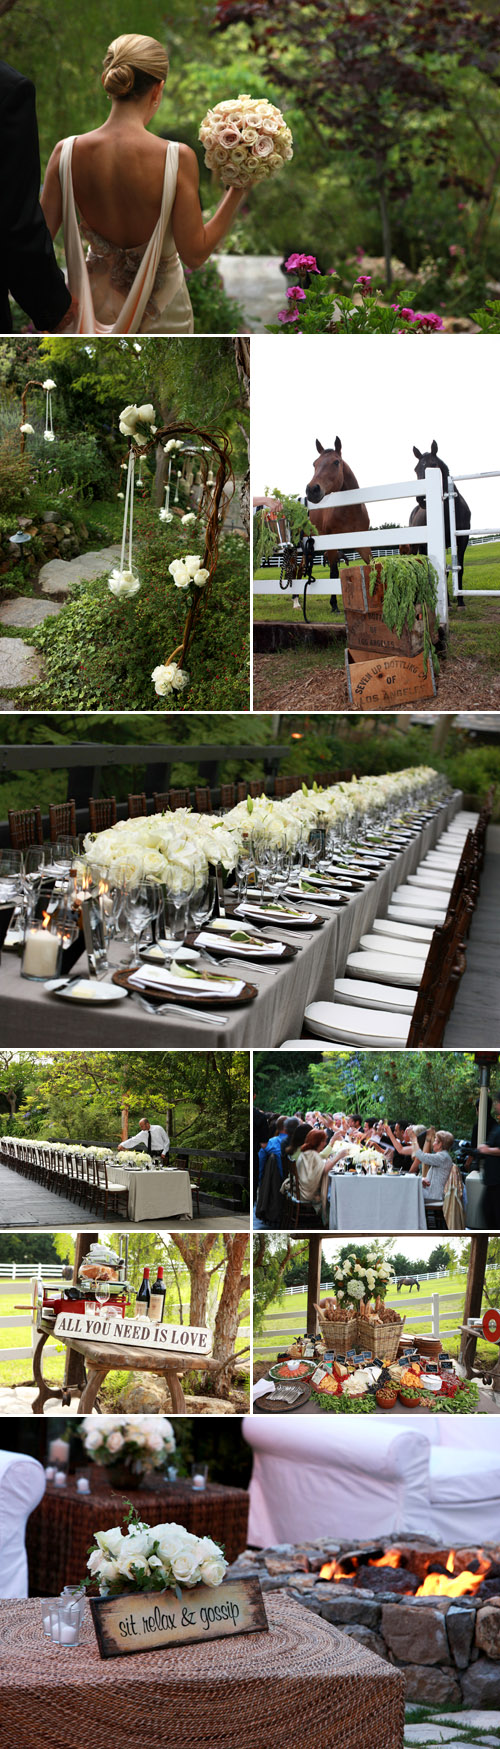 Malibu farm wedding design by Lisa Gorjestani of Details Event Planning, photos by Starla Fortunato